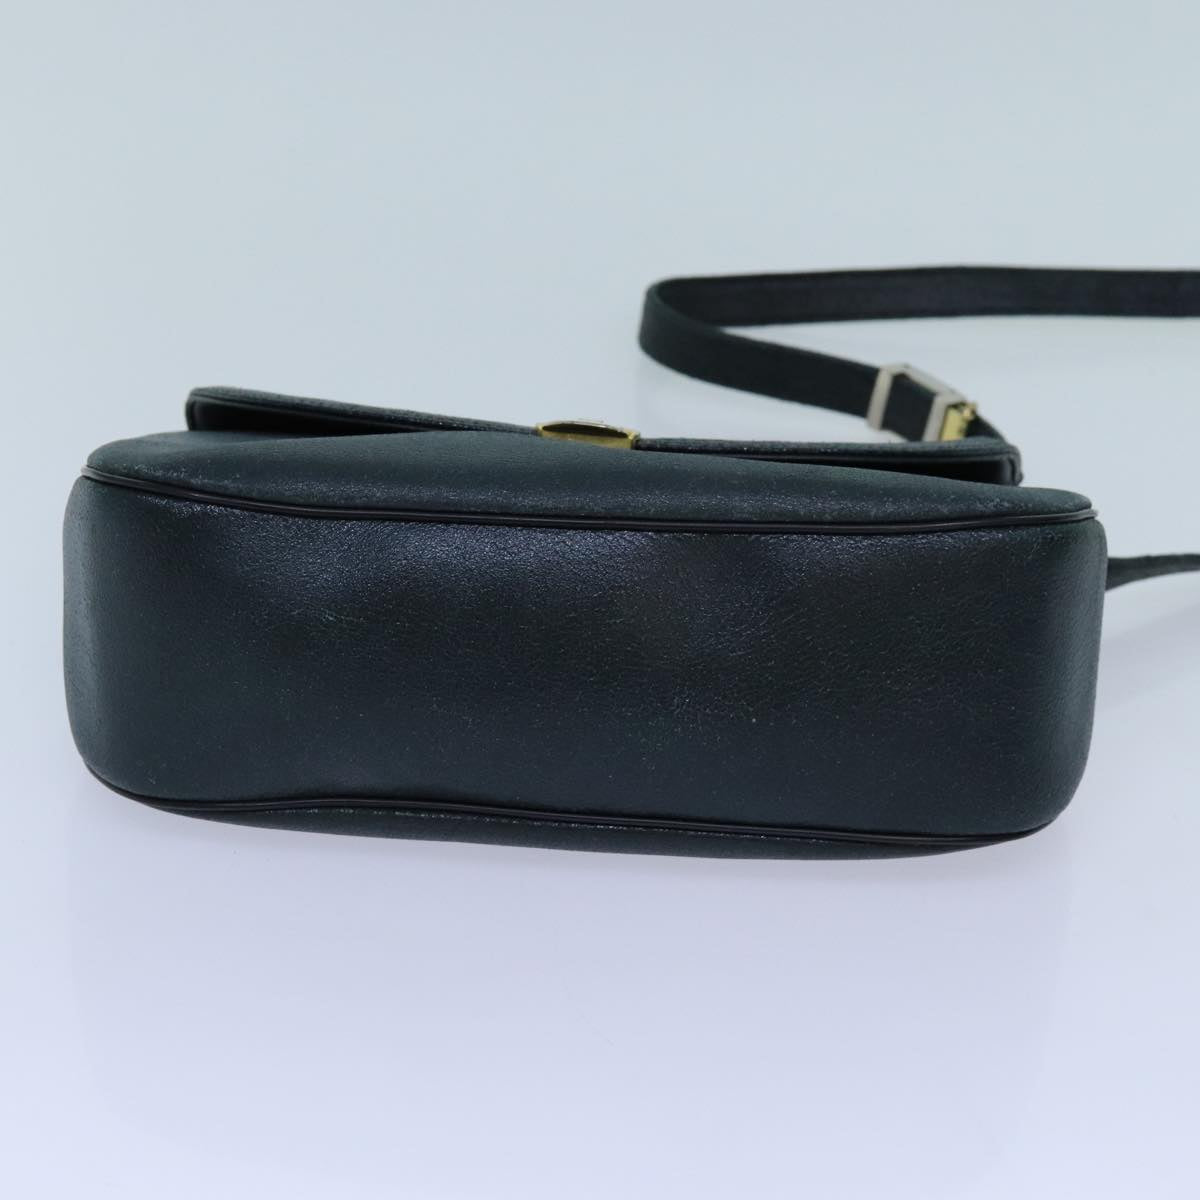 GIVENCHY PRADA Burberry Shoulder Bag Nylon Leather 3Set Black Beige Auth bs13505